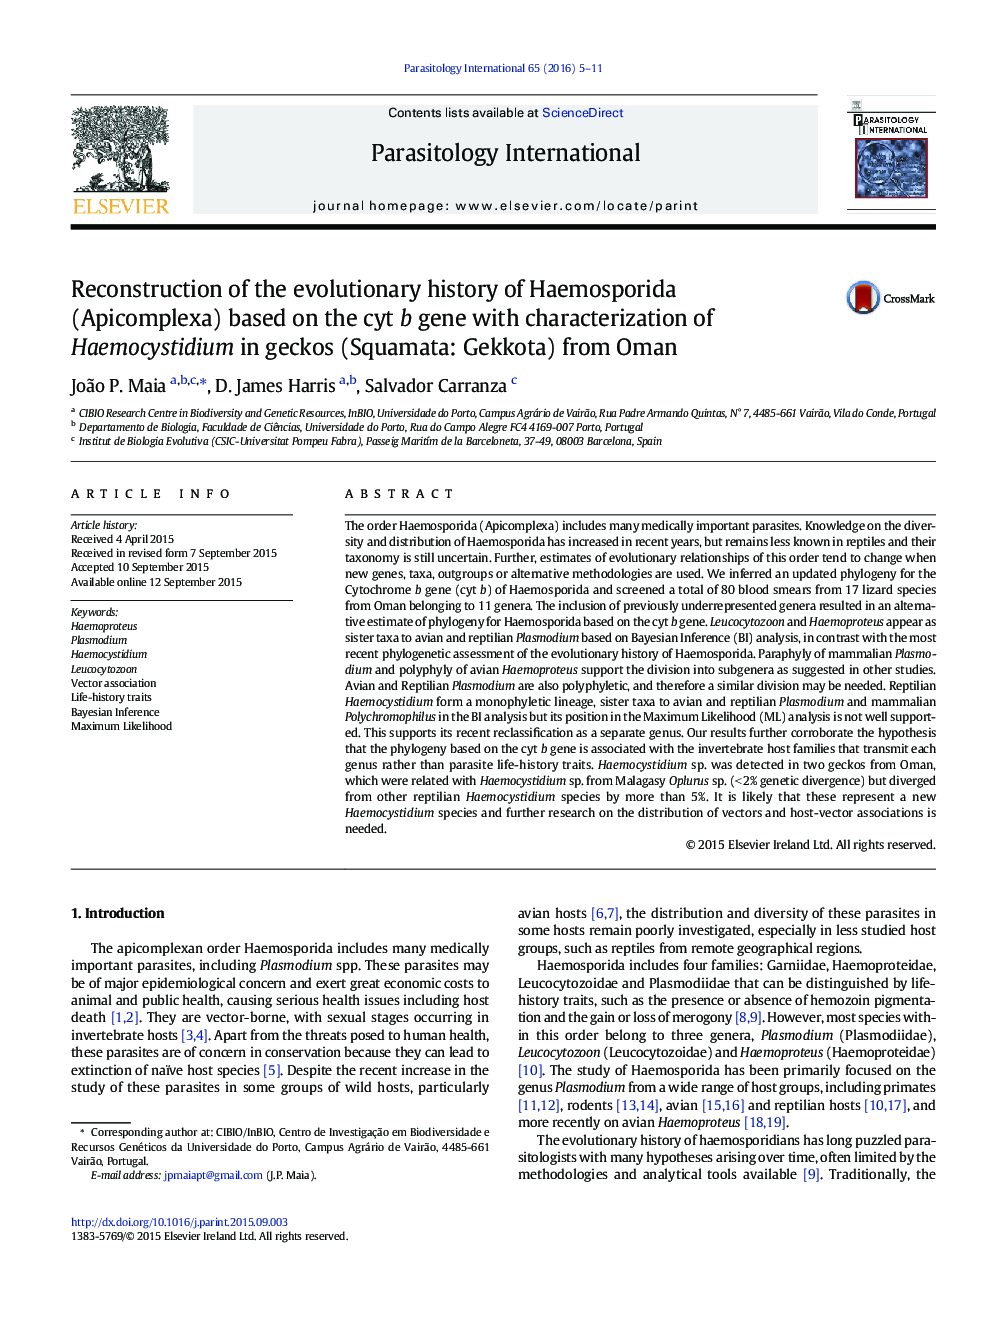 Reconstruction of the evolutionary history of Haemosporida (Apicomplexa) based on the cyt b gene with characterization of Haemocystidium in geckos (Squamata: Gekkota) from Oman